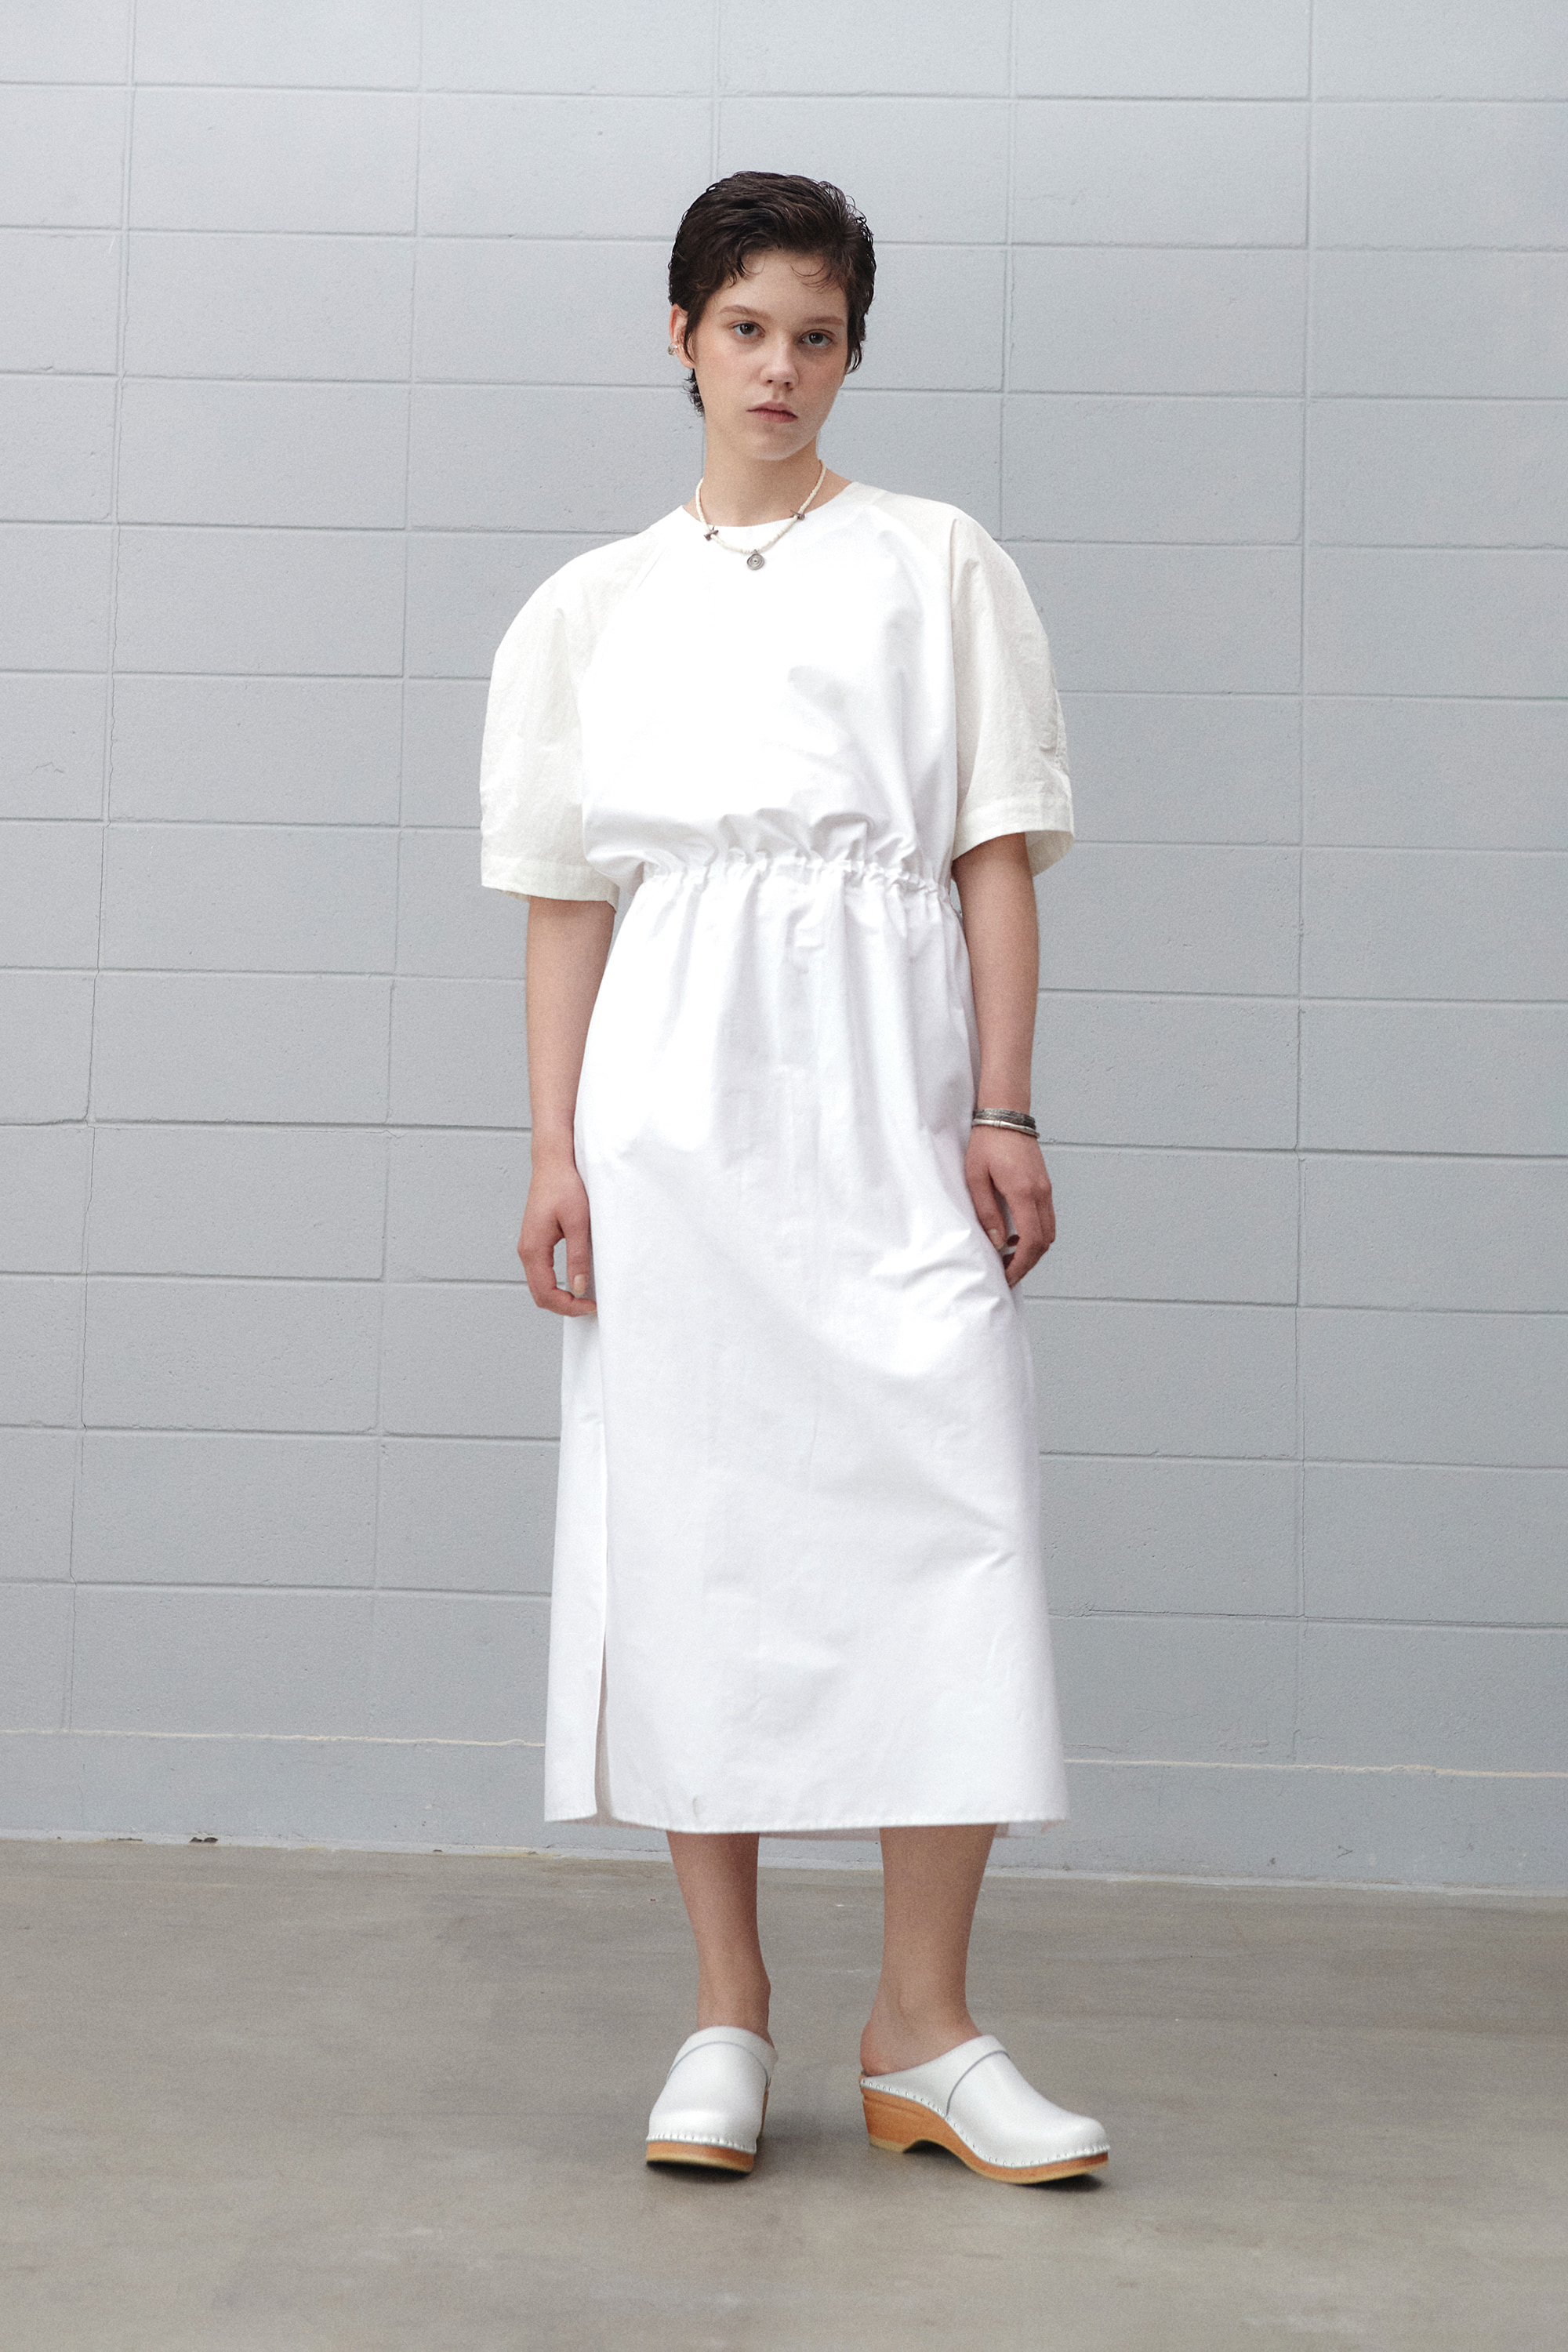 BEKASIN NYLON DRESS WHITE